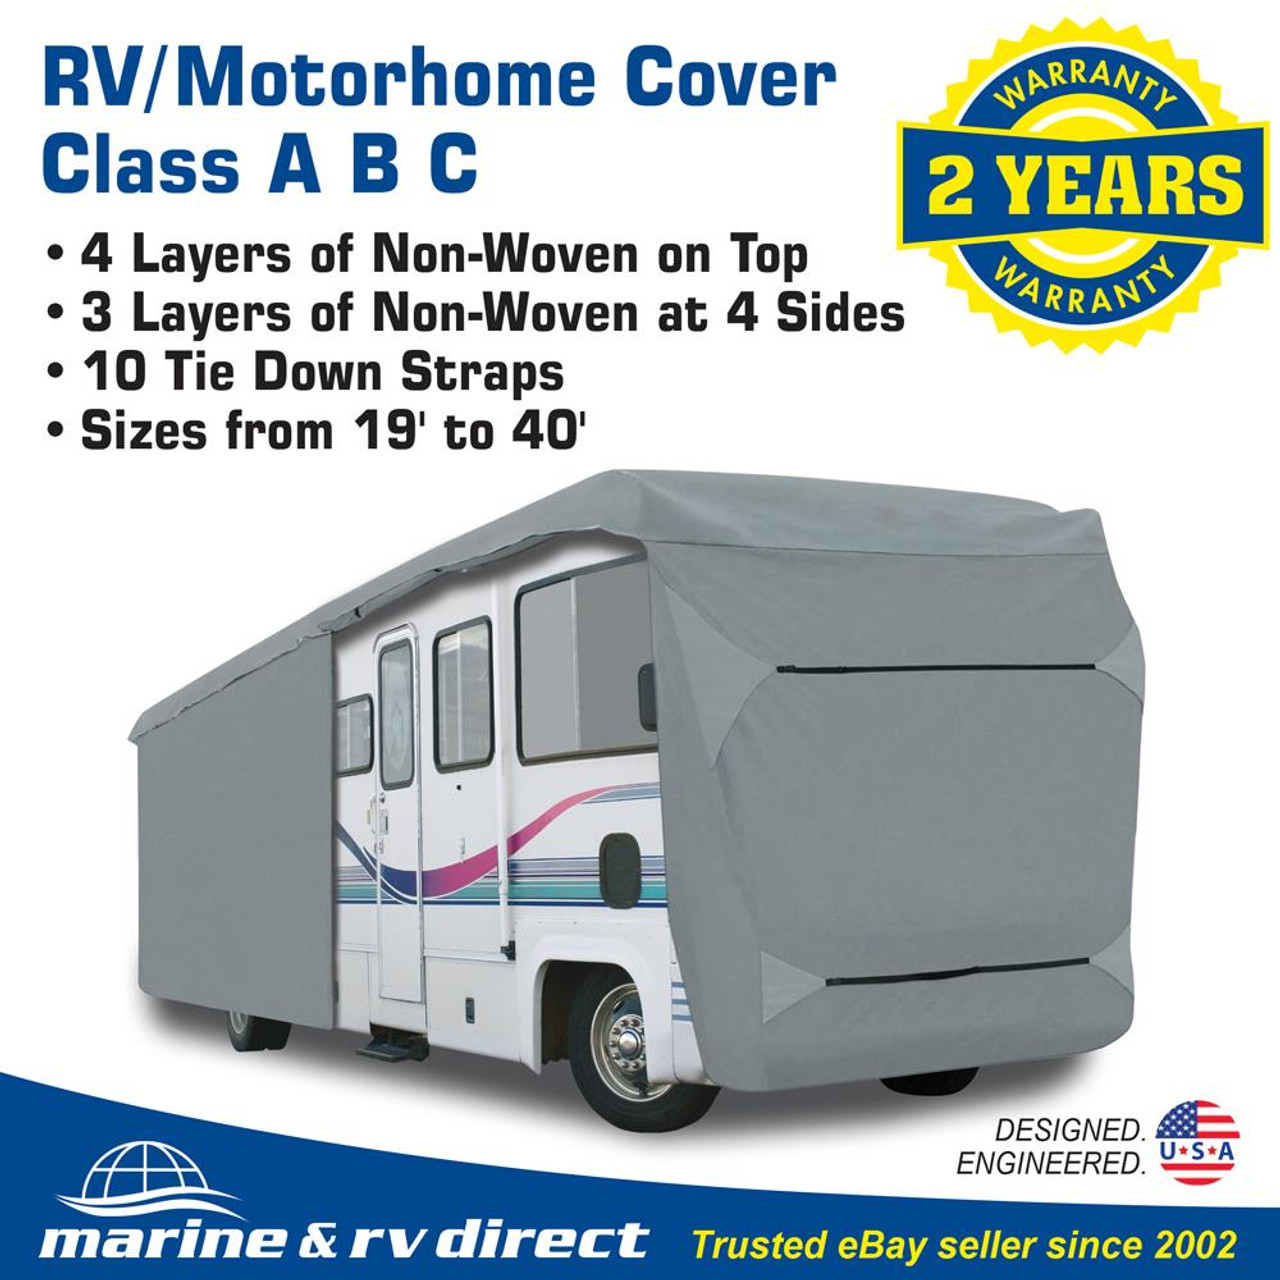 Waterproof RV Cover Motorhome Camper Travel Trailer Fit 20'-24’ Class A B C